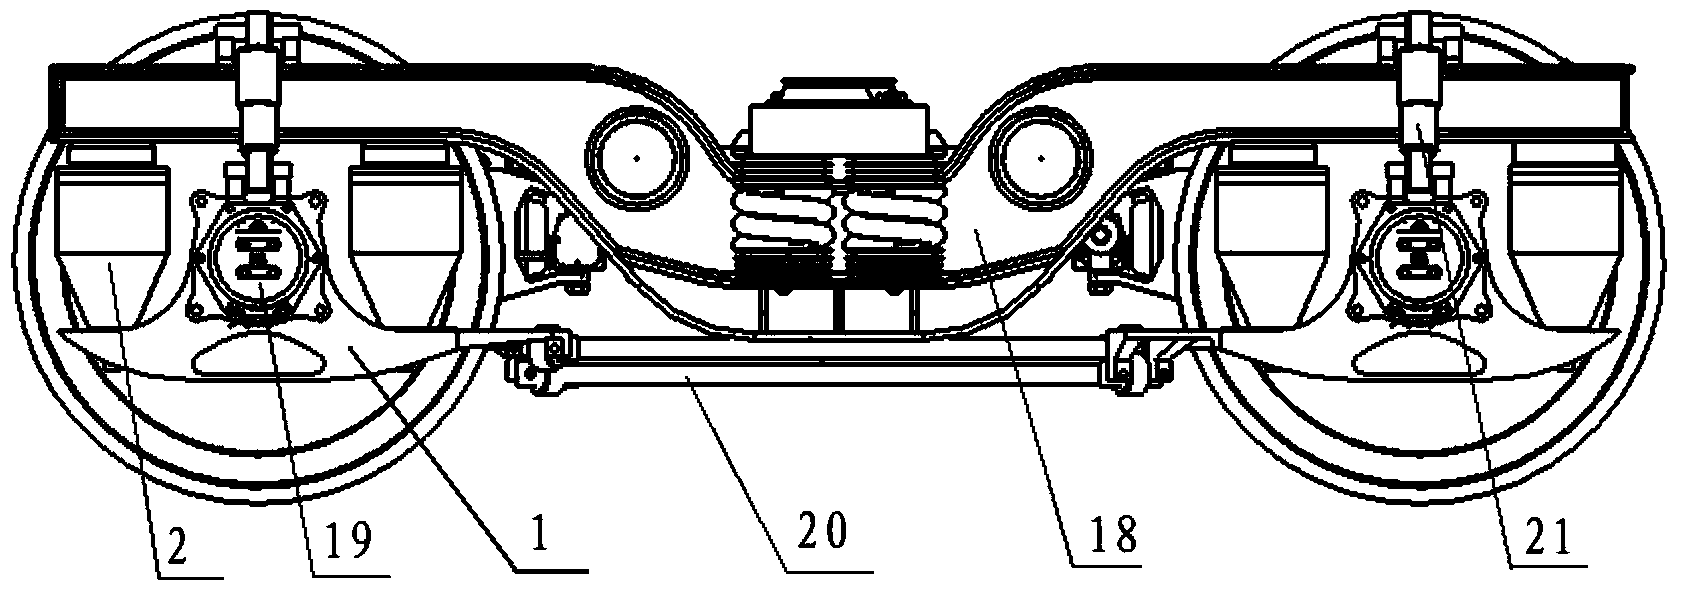 Bogie axle box suspension device